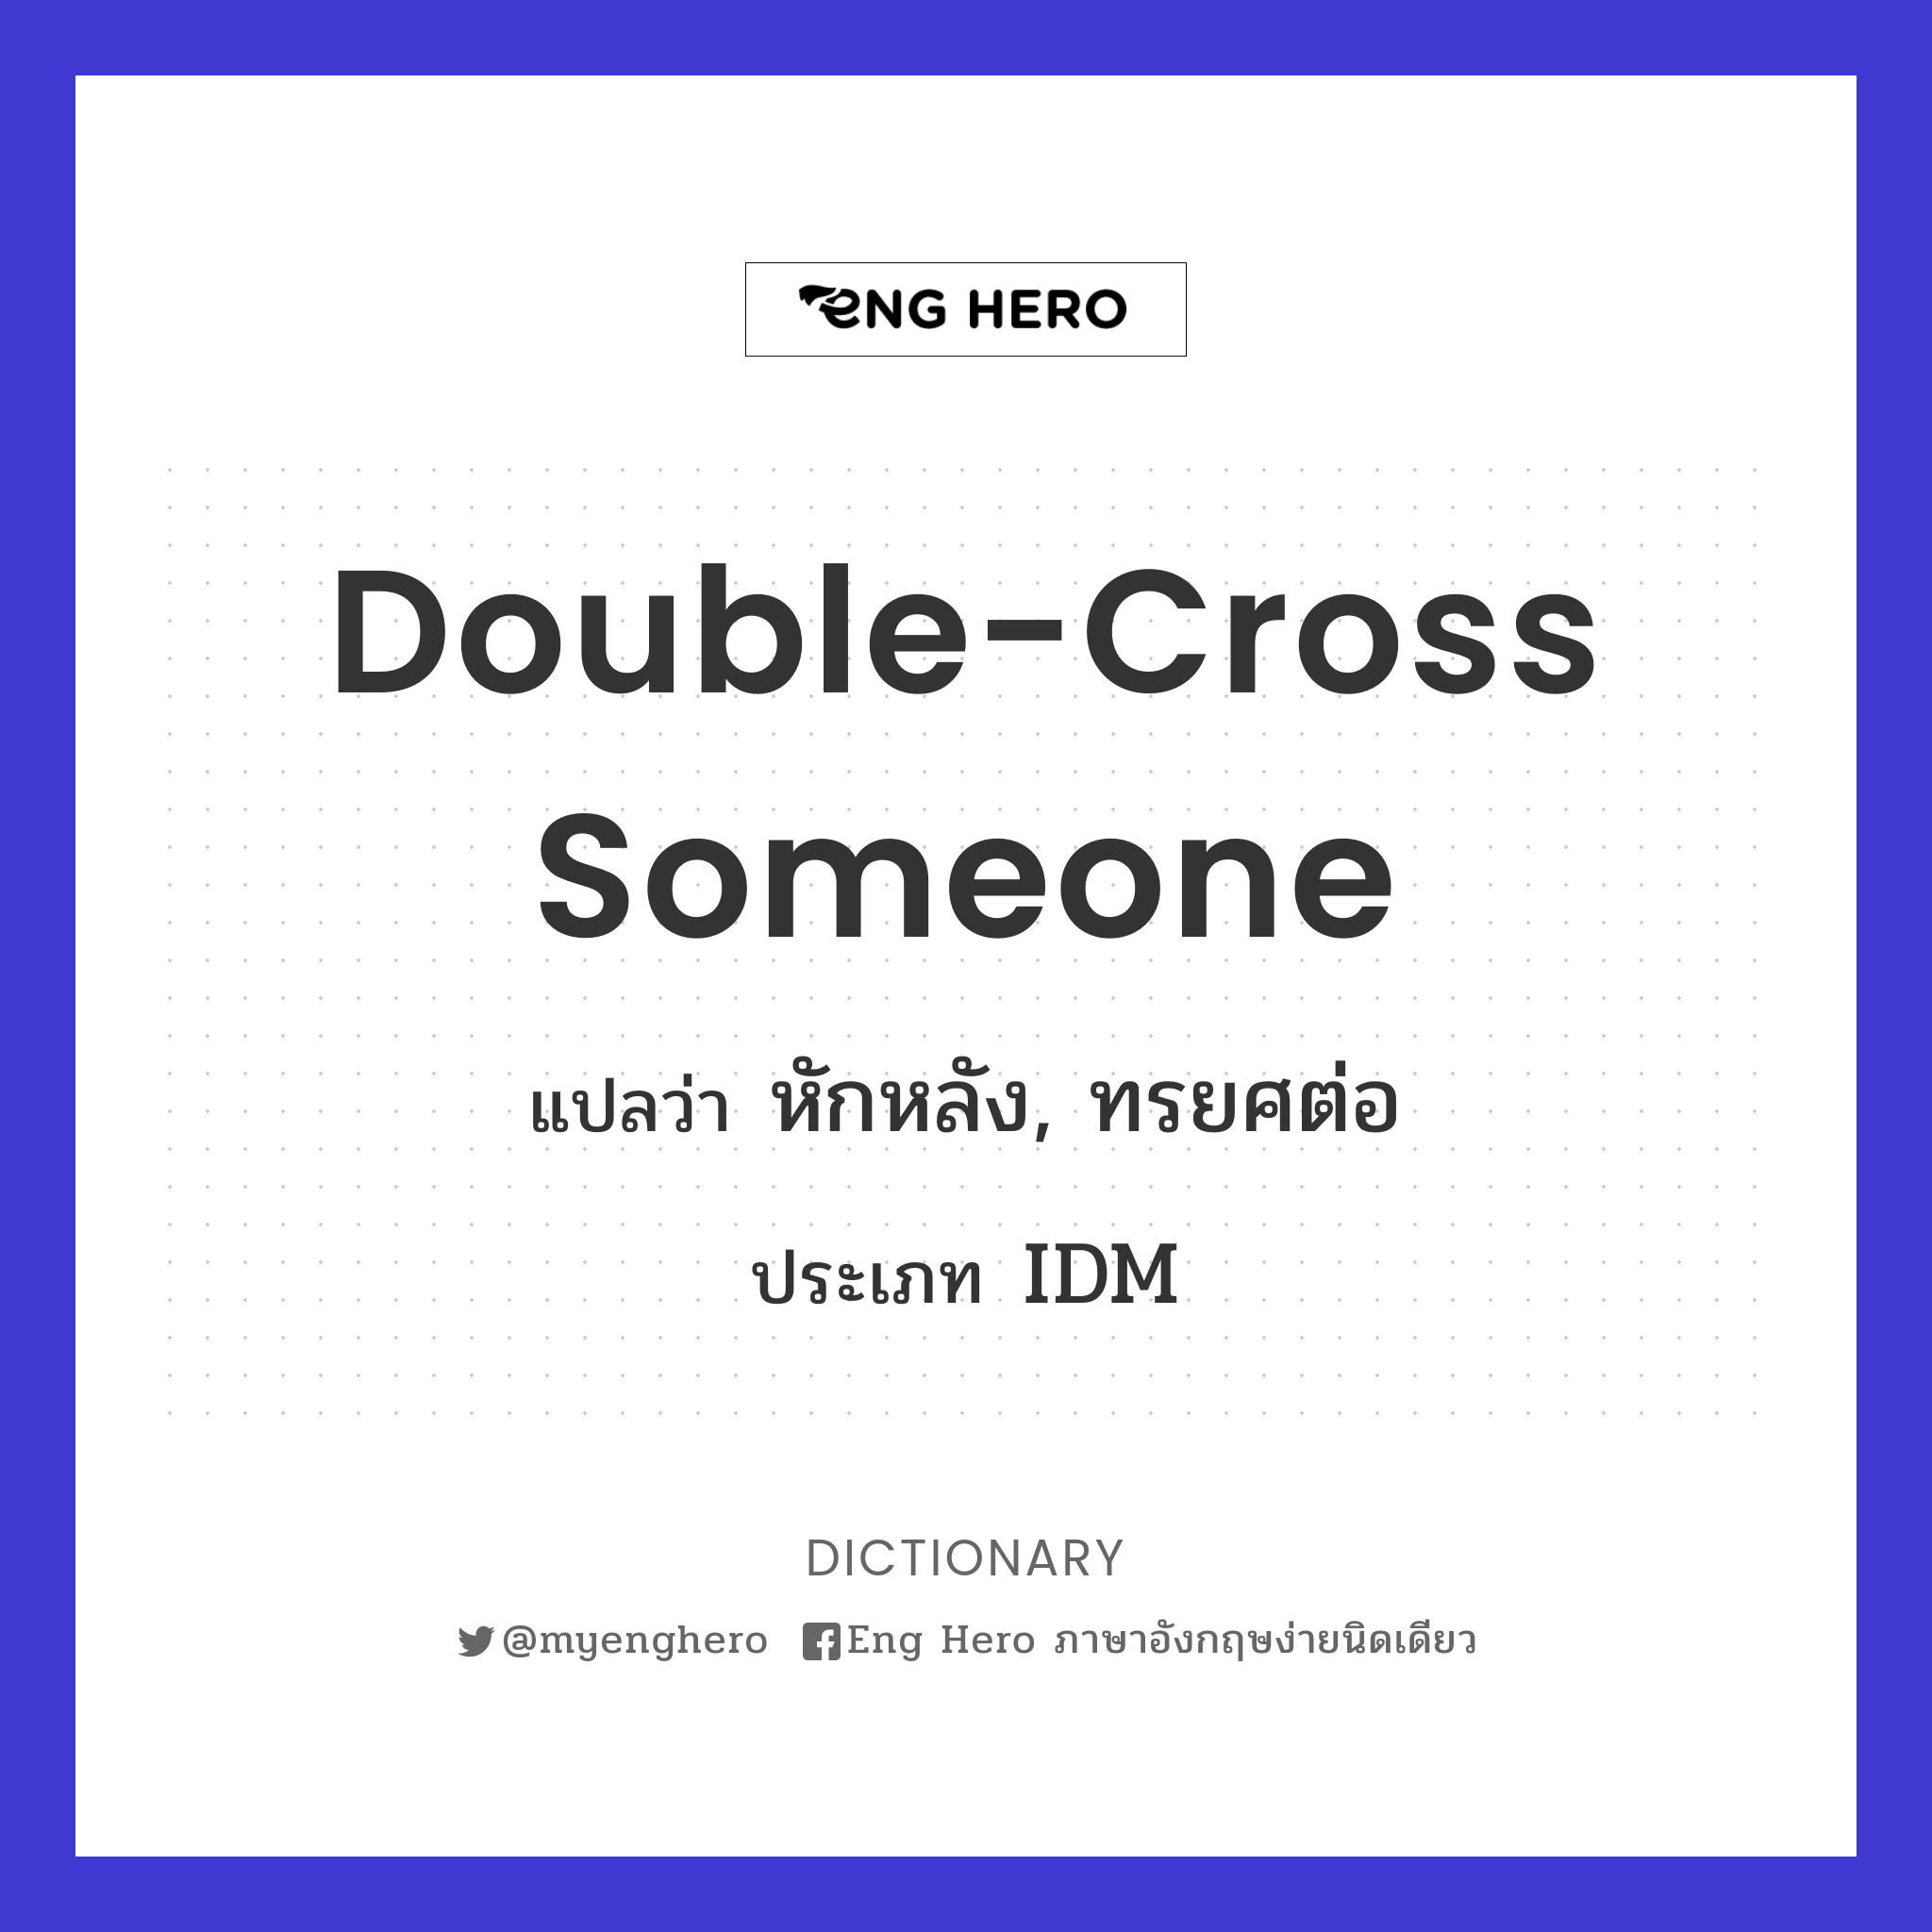 double-cross someone